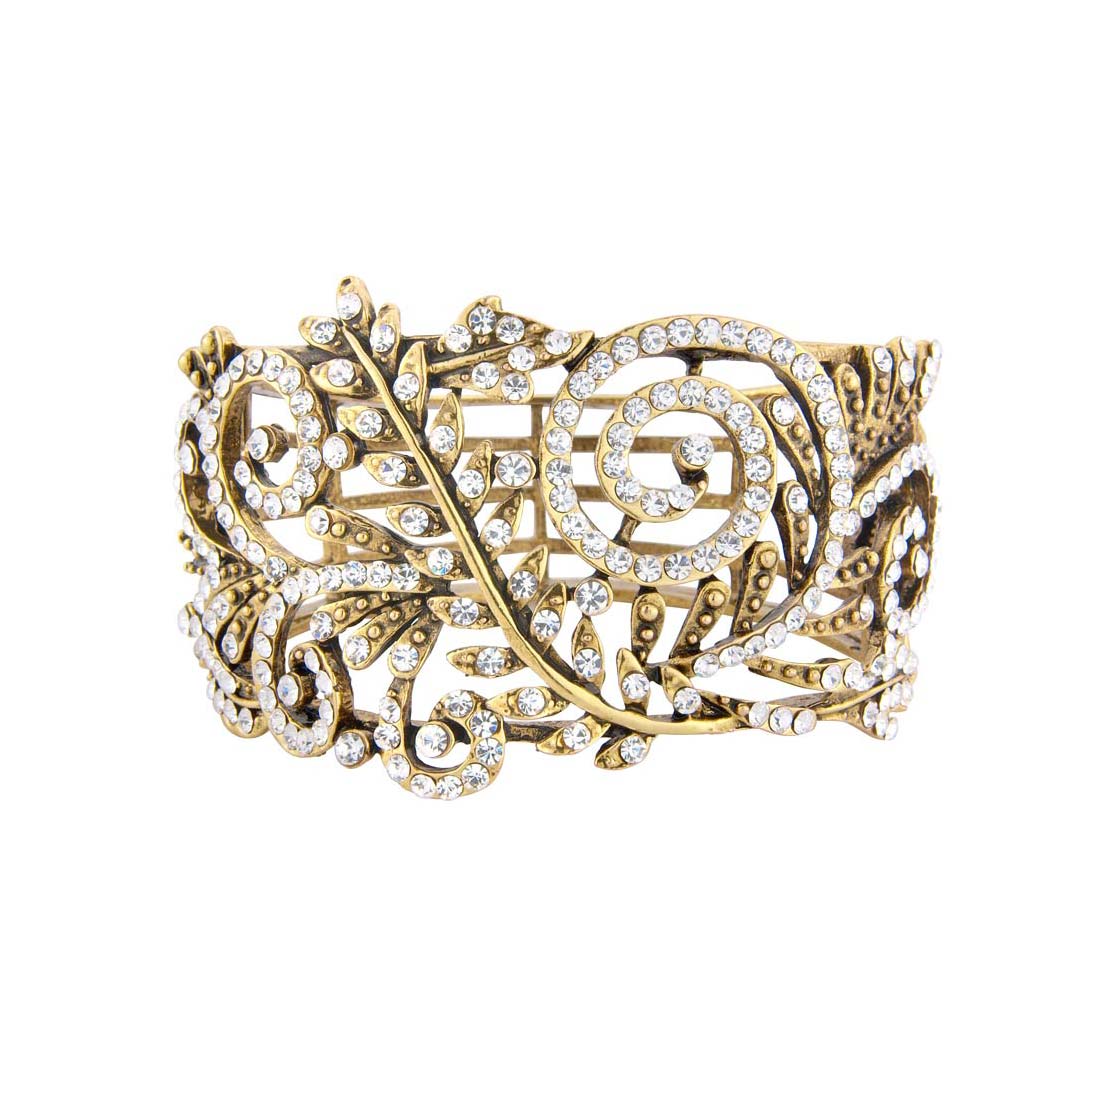 Treasured Beauty Gold Vintage Style Crystal Scroll Bangle